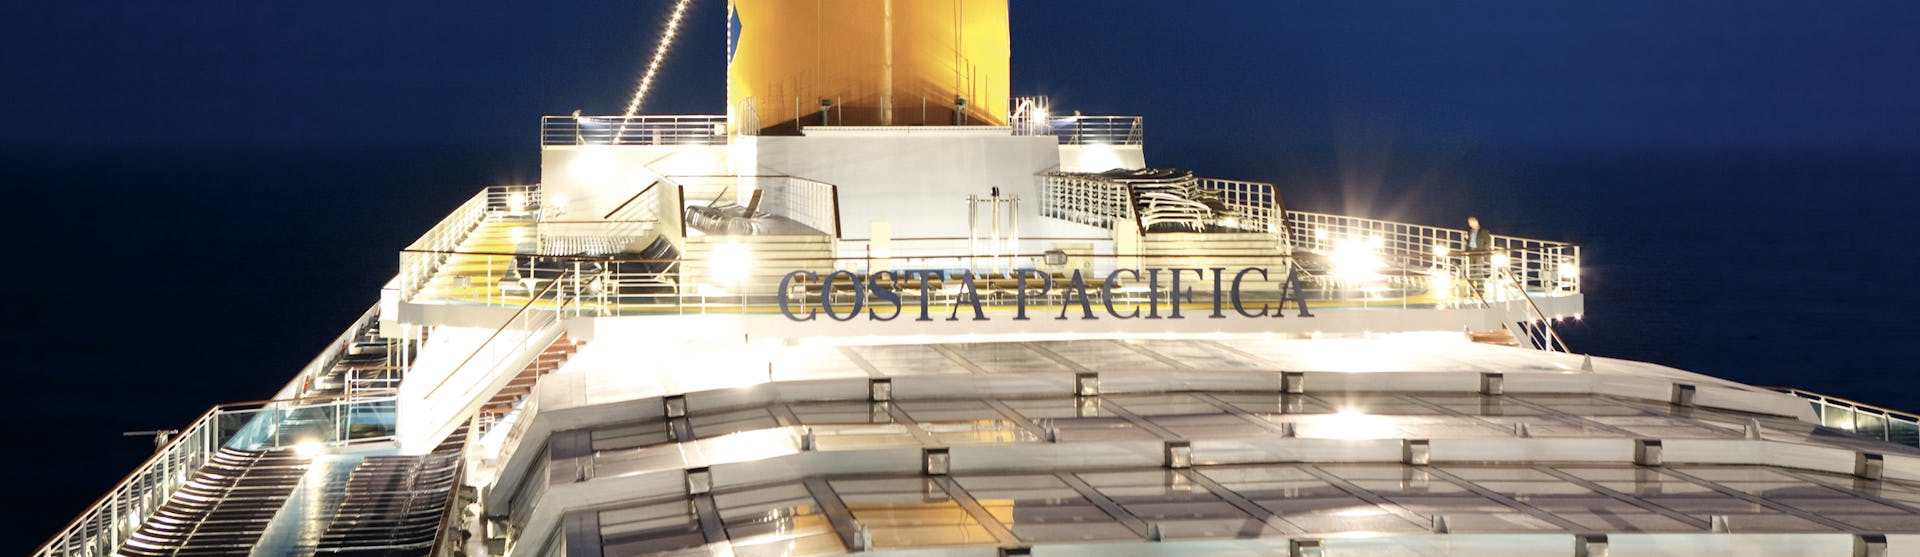 Costa Pacifica - Costa Cruceros